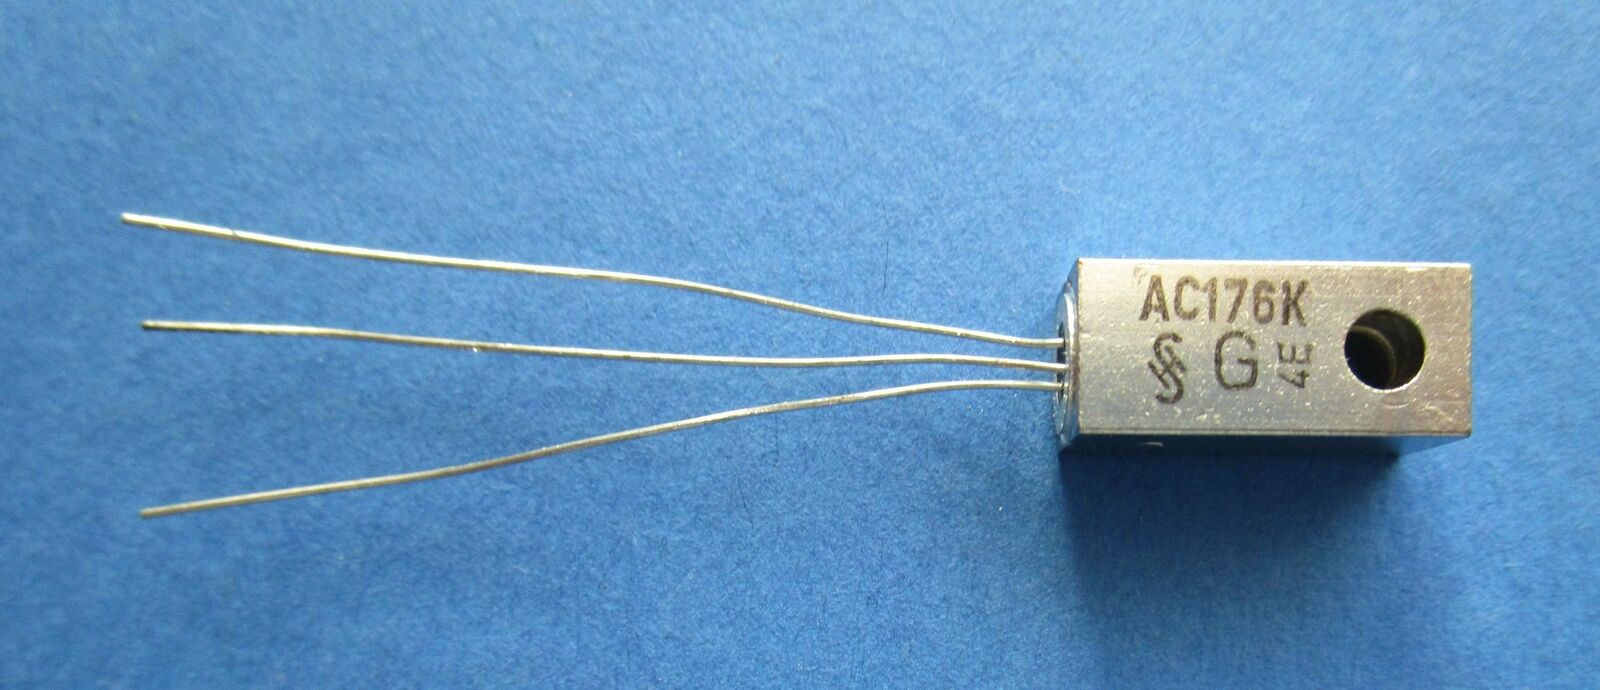 10 germanium transistors AC 176K  NPN  NOS SIEMENS +++NEW LISTING+++